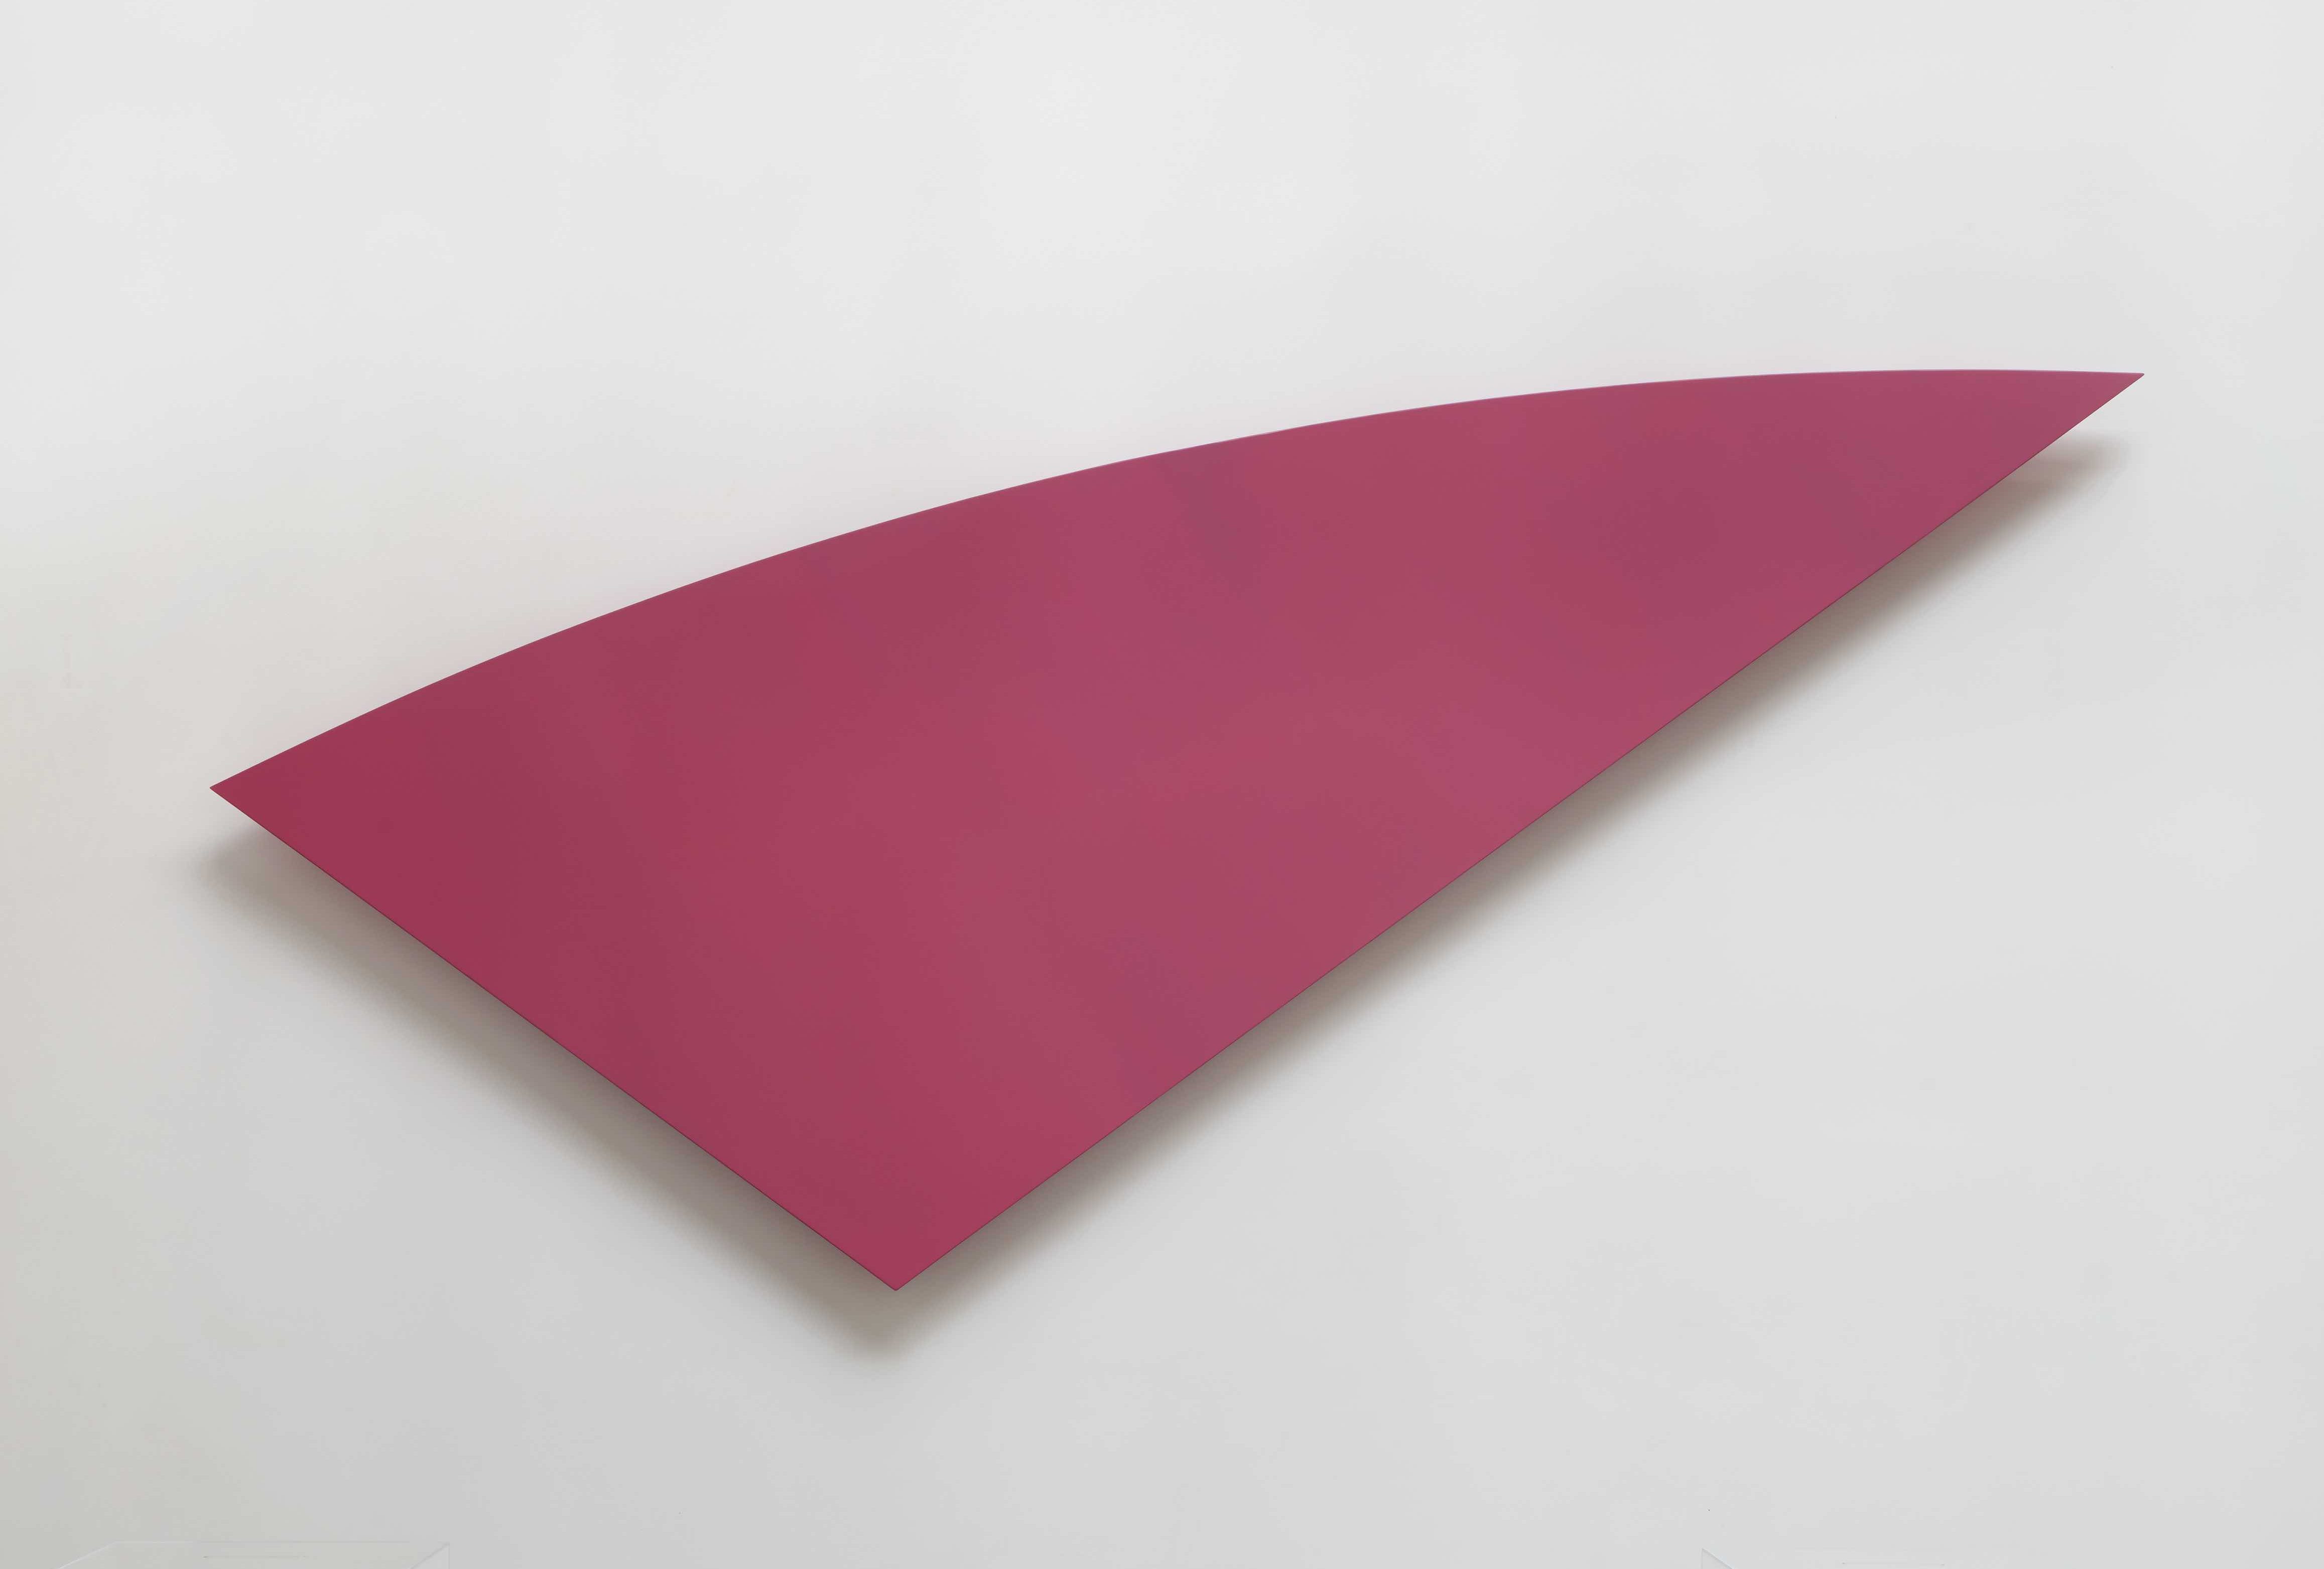 Pink Curve, 2010
